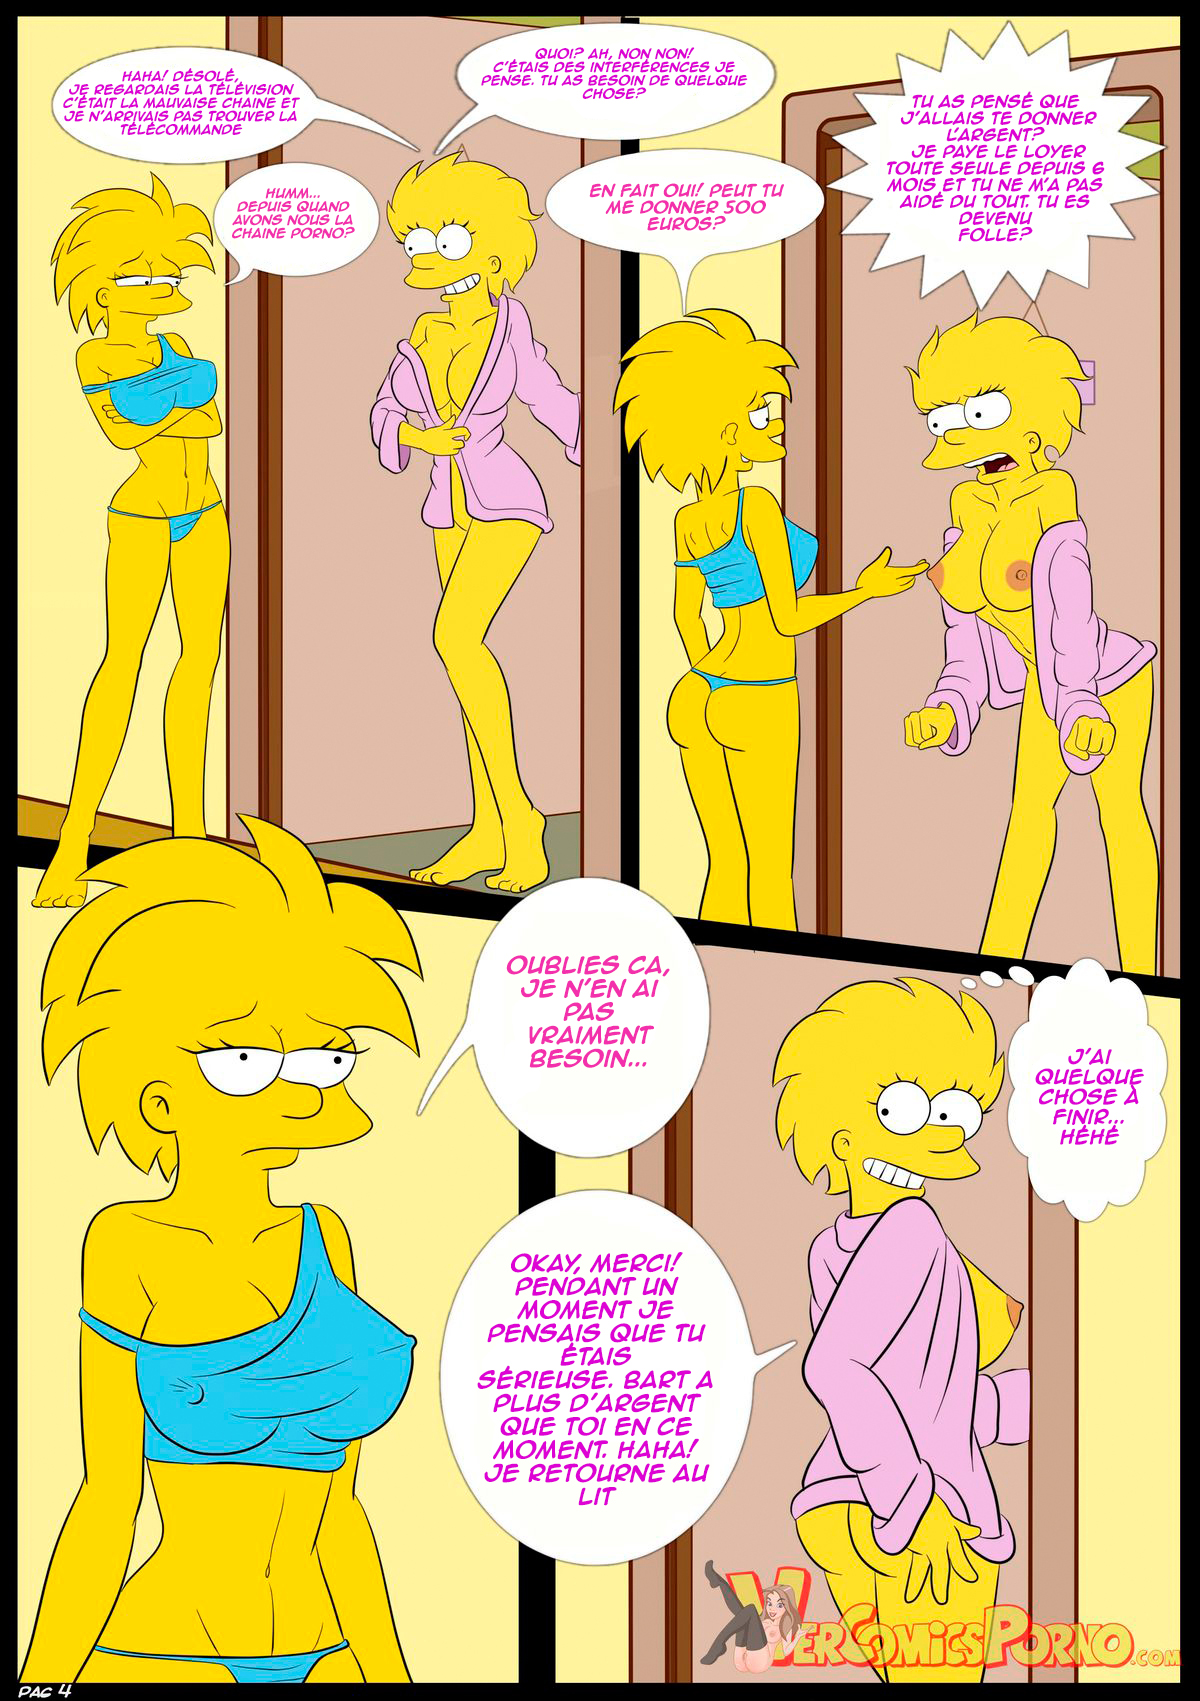 Los-Simpsons-Viejas-Costumbres.2-La-seduccion-FRE-page04--Gotofap.tk--48717476.jpg